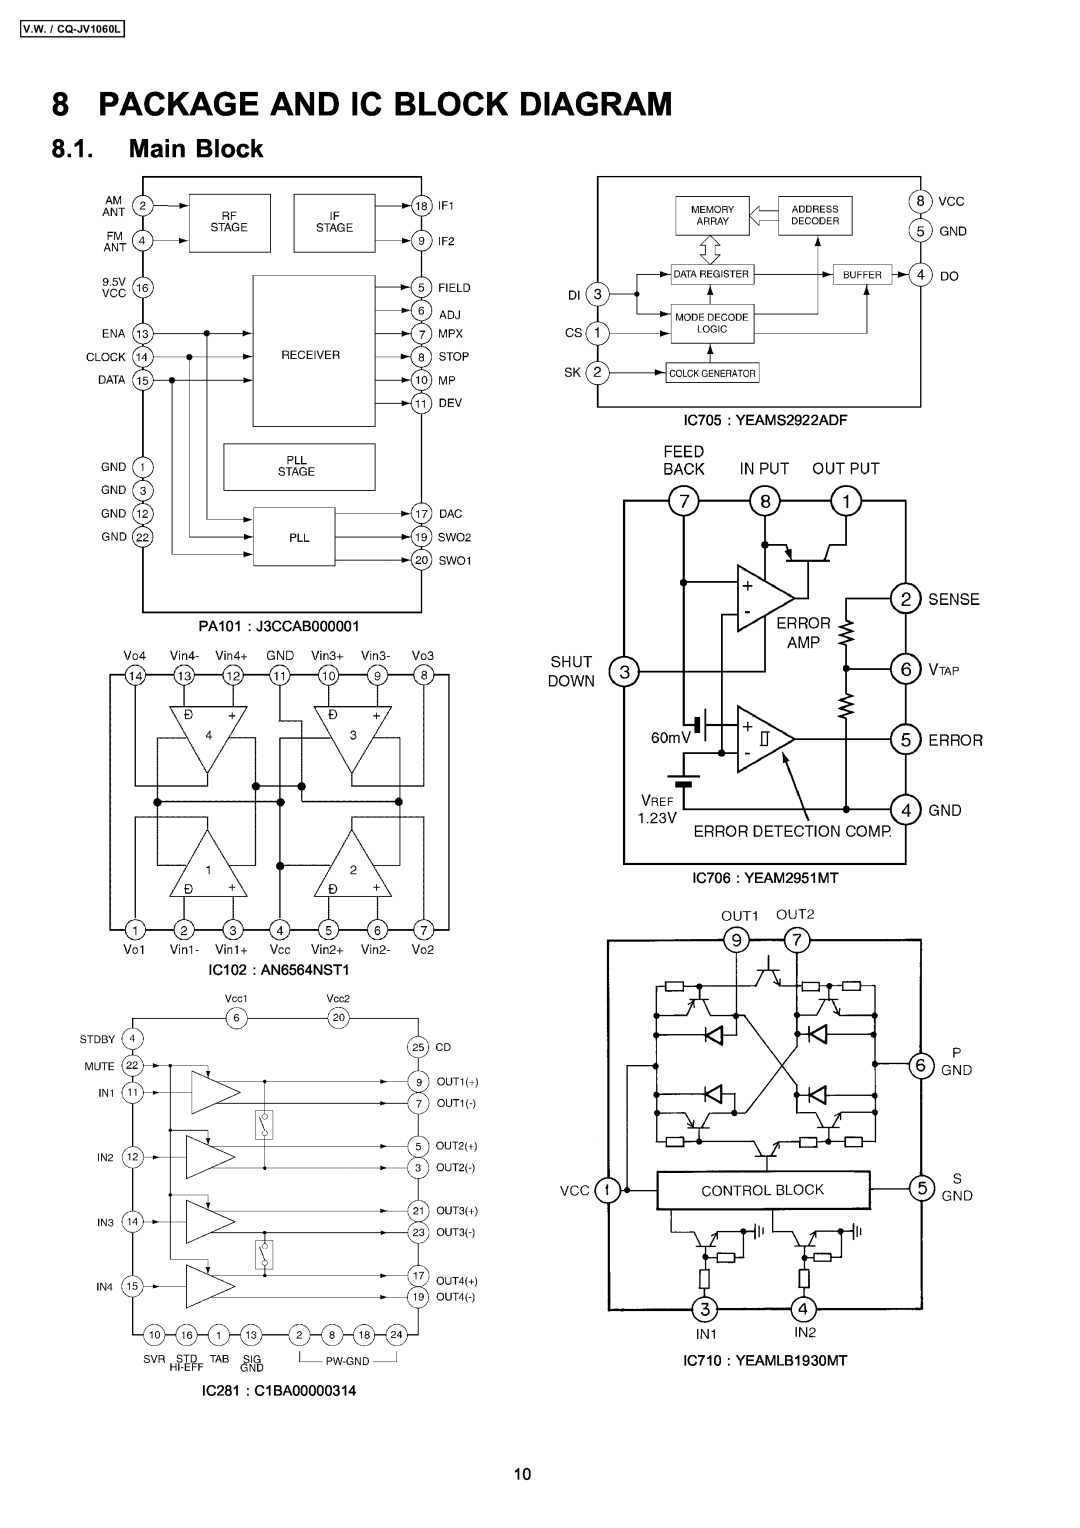 Panasonic dimensions Package And Ic Block Diagram, Main Block, IC705 YEAMS2922ADF PA101 J3CCAB000001, V.W. / CQ-JV1060L 